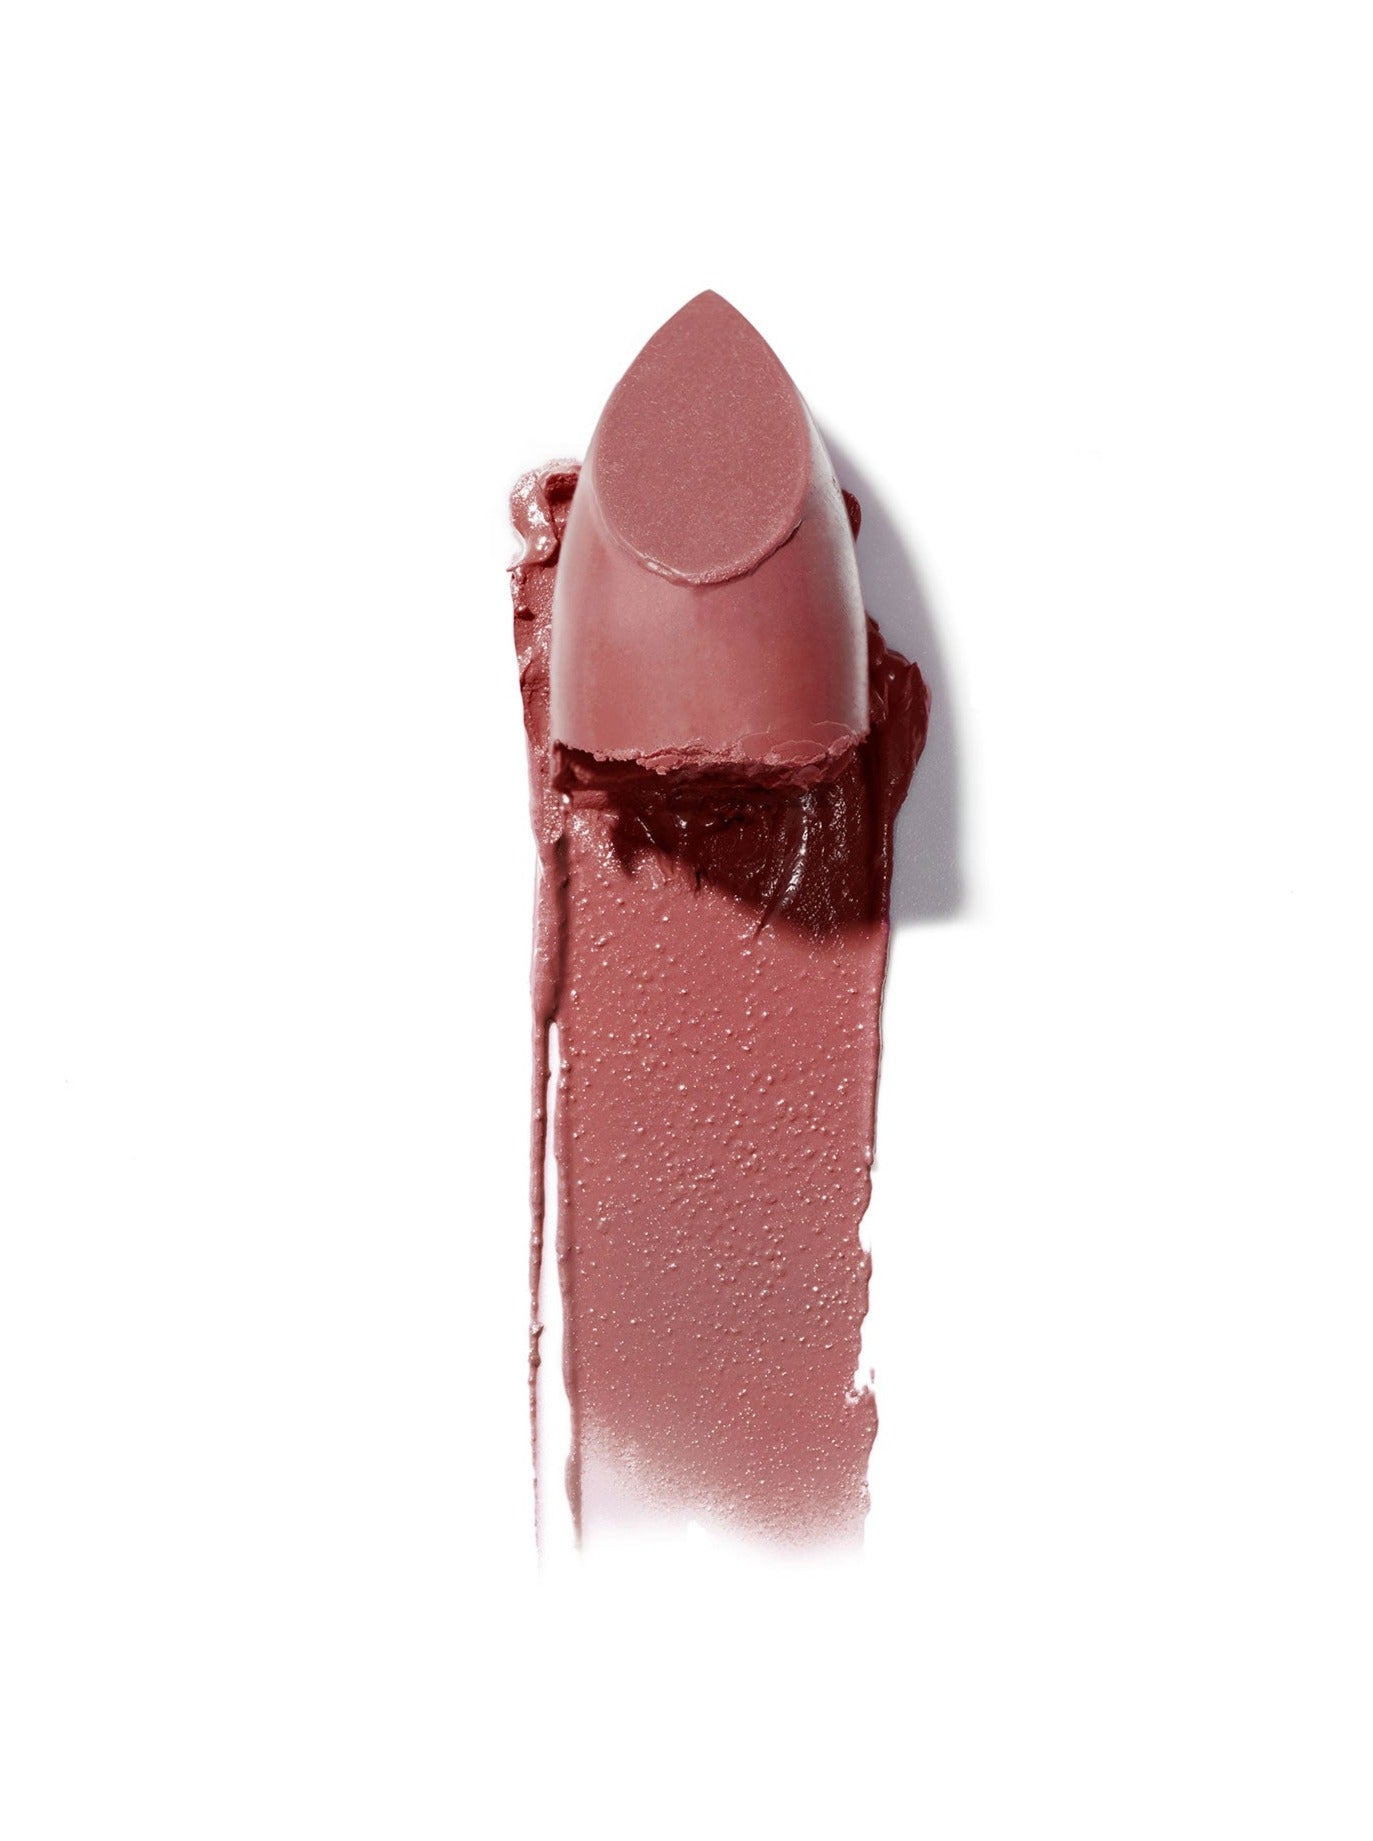 ILIA BEAUTY Color Block High Impact Lipstick